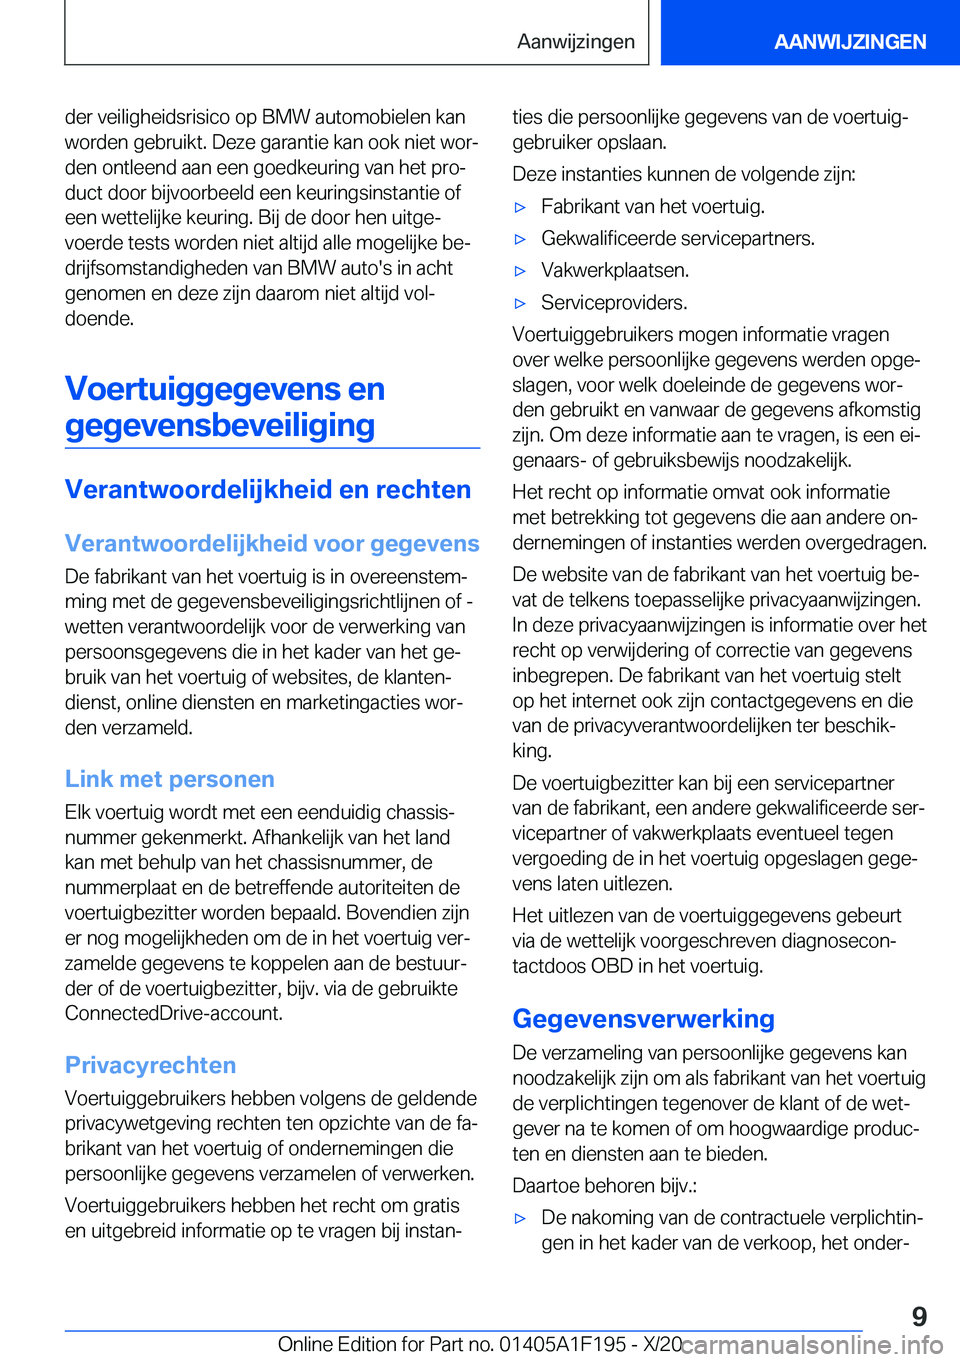 BMW M5 2021  Instructieboekjes (in Dutch) �d�e�r��v�e�i�l�i�g�h�e�i�d�s�r�i�s�i�c�o��o�p��B�M�W��a�u�t�o�m�o�b�i�e�l�e�n��k�a�n
�w�o�r�d�e�n��g�e�b�r�u�i�k�t�.��D�e�z�e��g�a�r�a�n�t�i�e��k�a�n��o�o�k��n�i�e�t��w�o�rj
�d�e�n��o�n